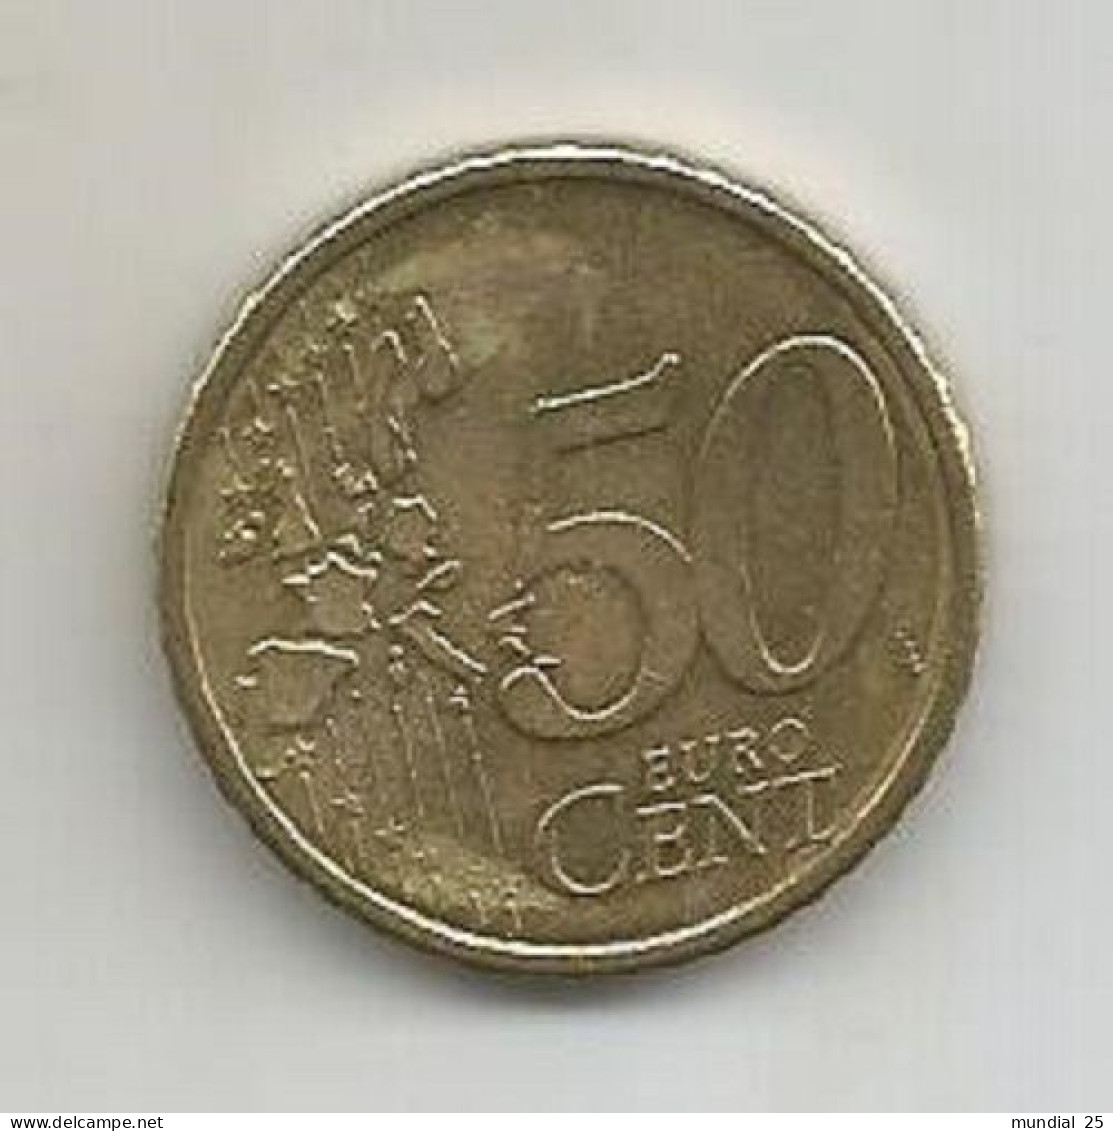 FINLAND 50 EURO CENT 2000 M - Finlandía